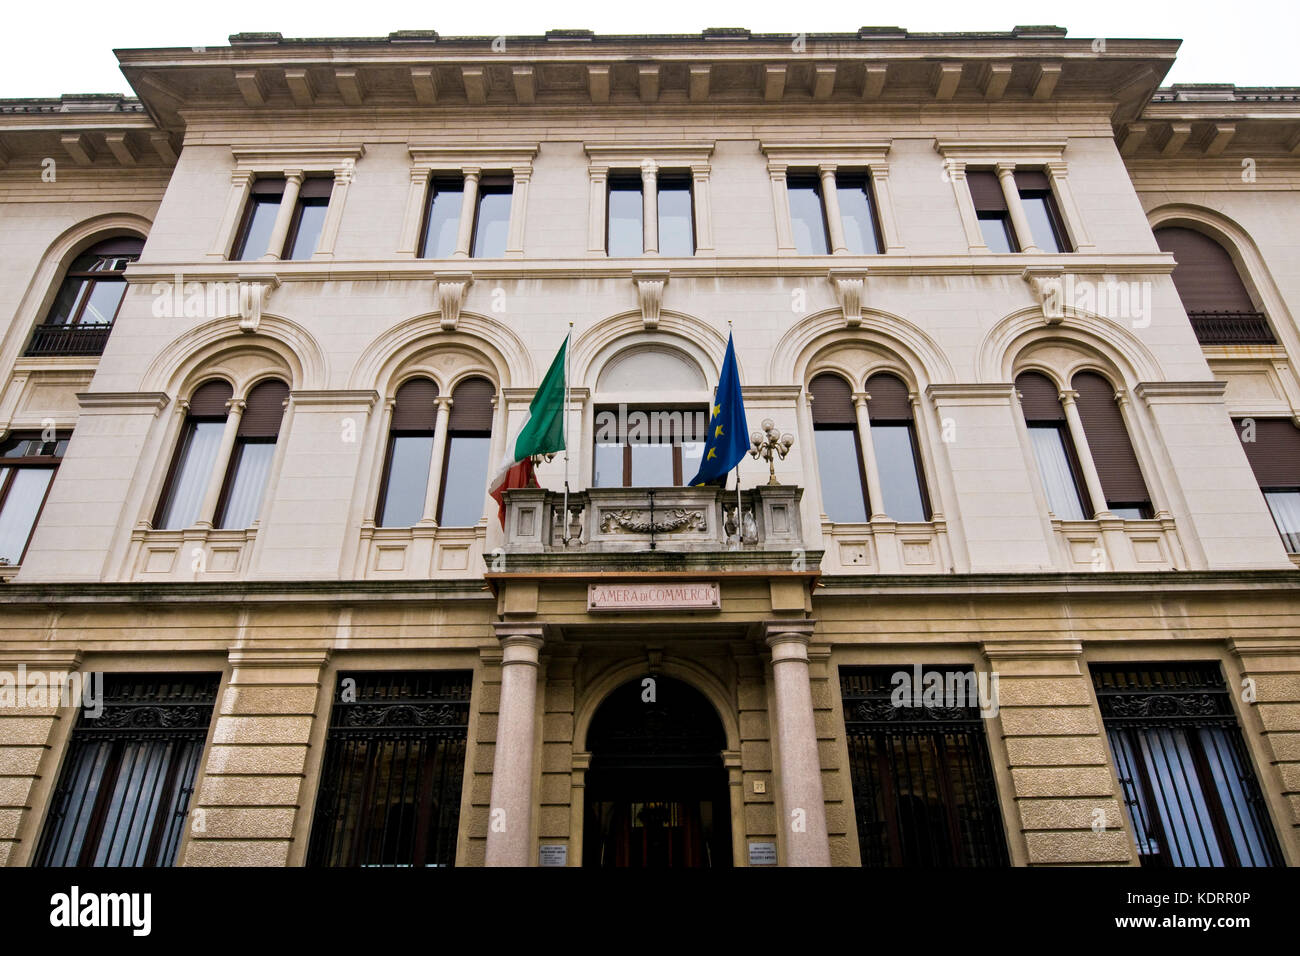 Camera di commercio, Pavia, Italy Stock Photo - Alamy